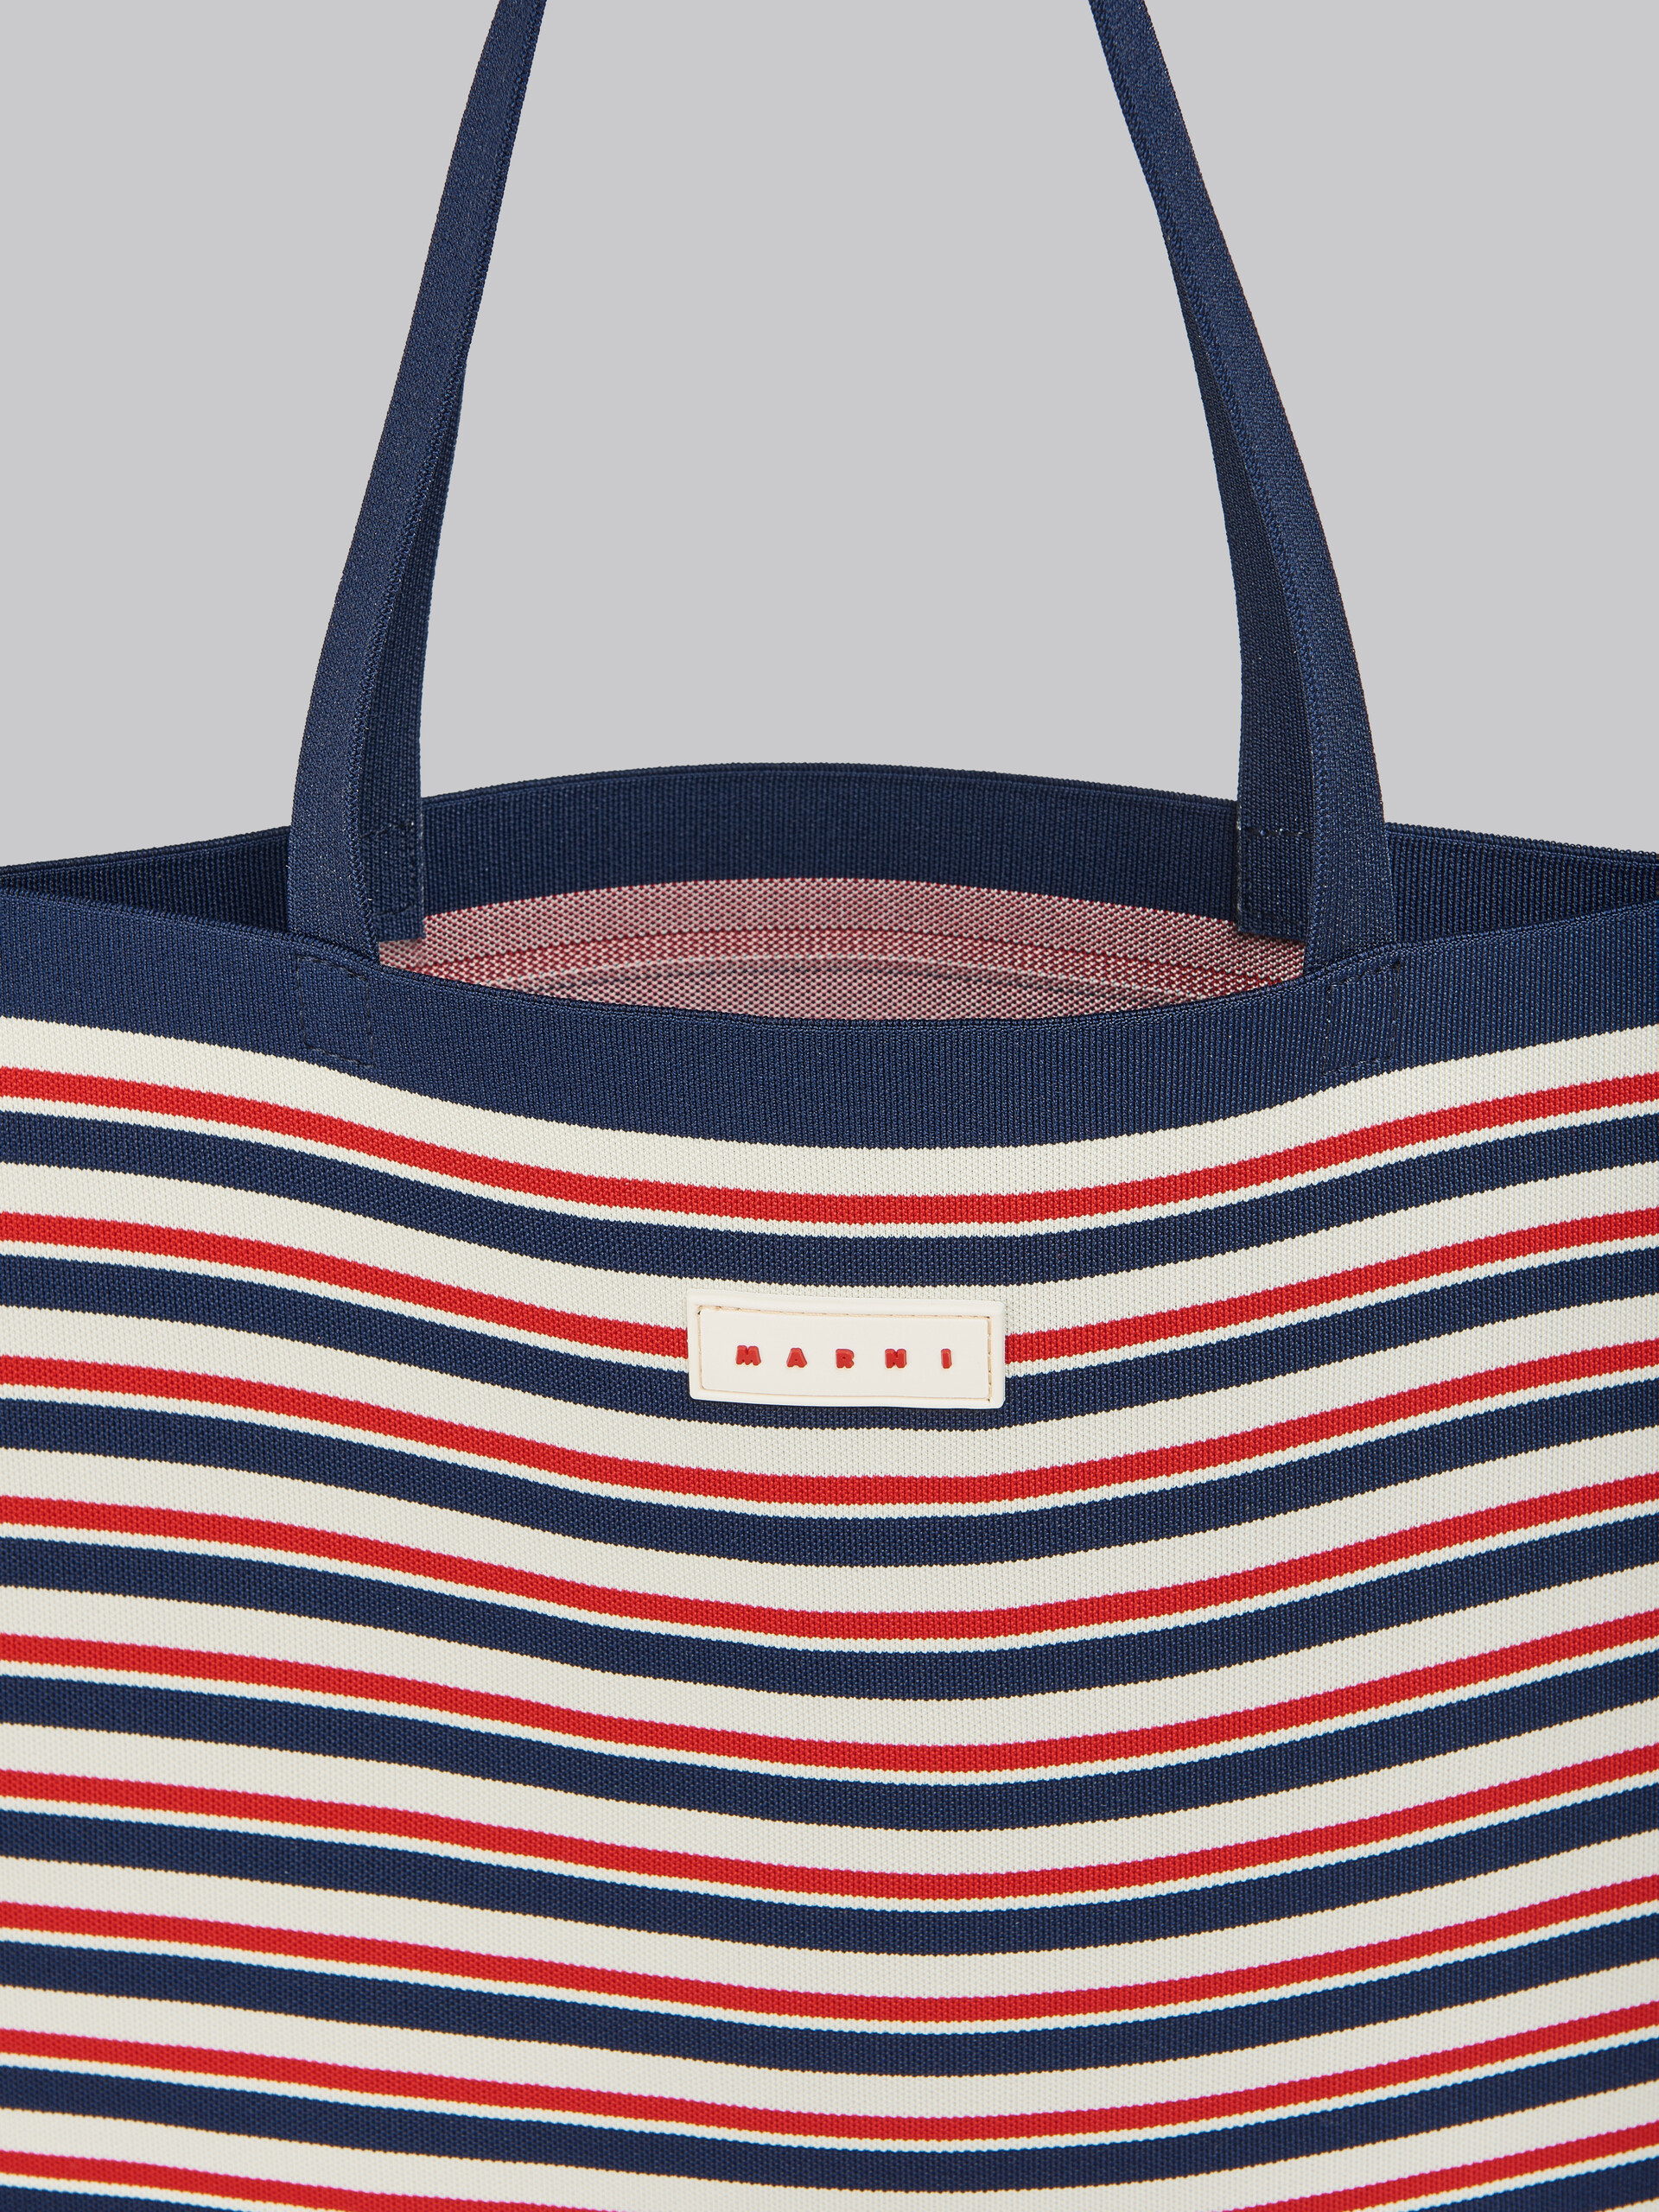 Tote Bag in jacquard a righe blu, bianche e rosse - Borse shopping - Image 4